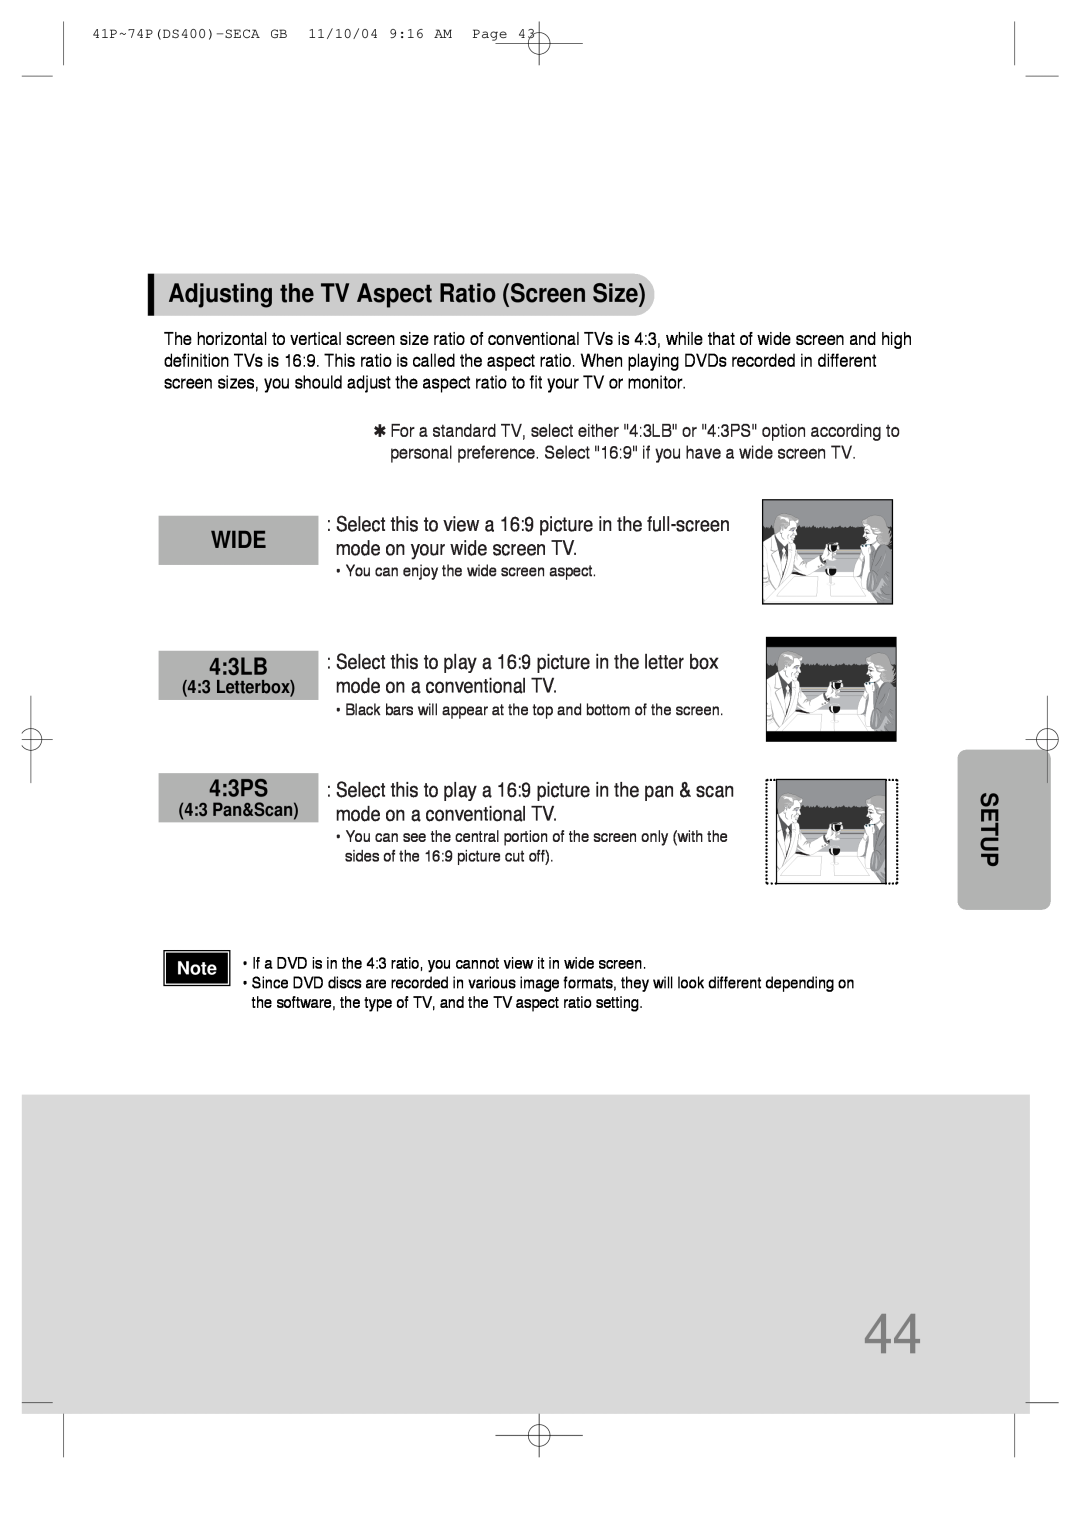 Samsung HT-DS400 instruction manual Adjusting the TV Aspect Ratio Screen Size, WIDE 4:3LB, 4:3PS, Setup 